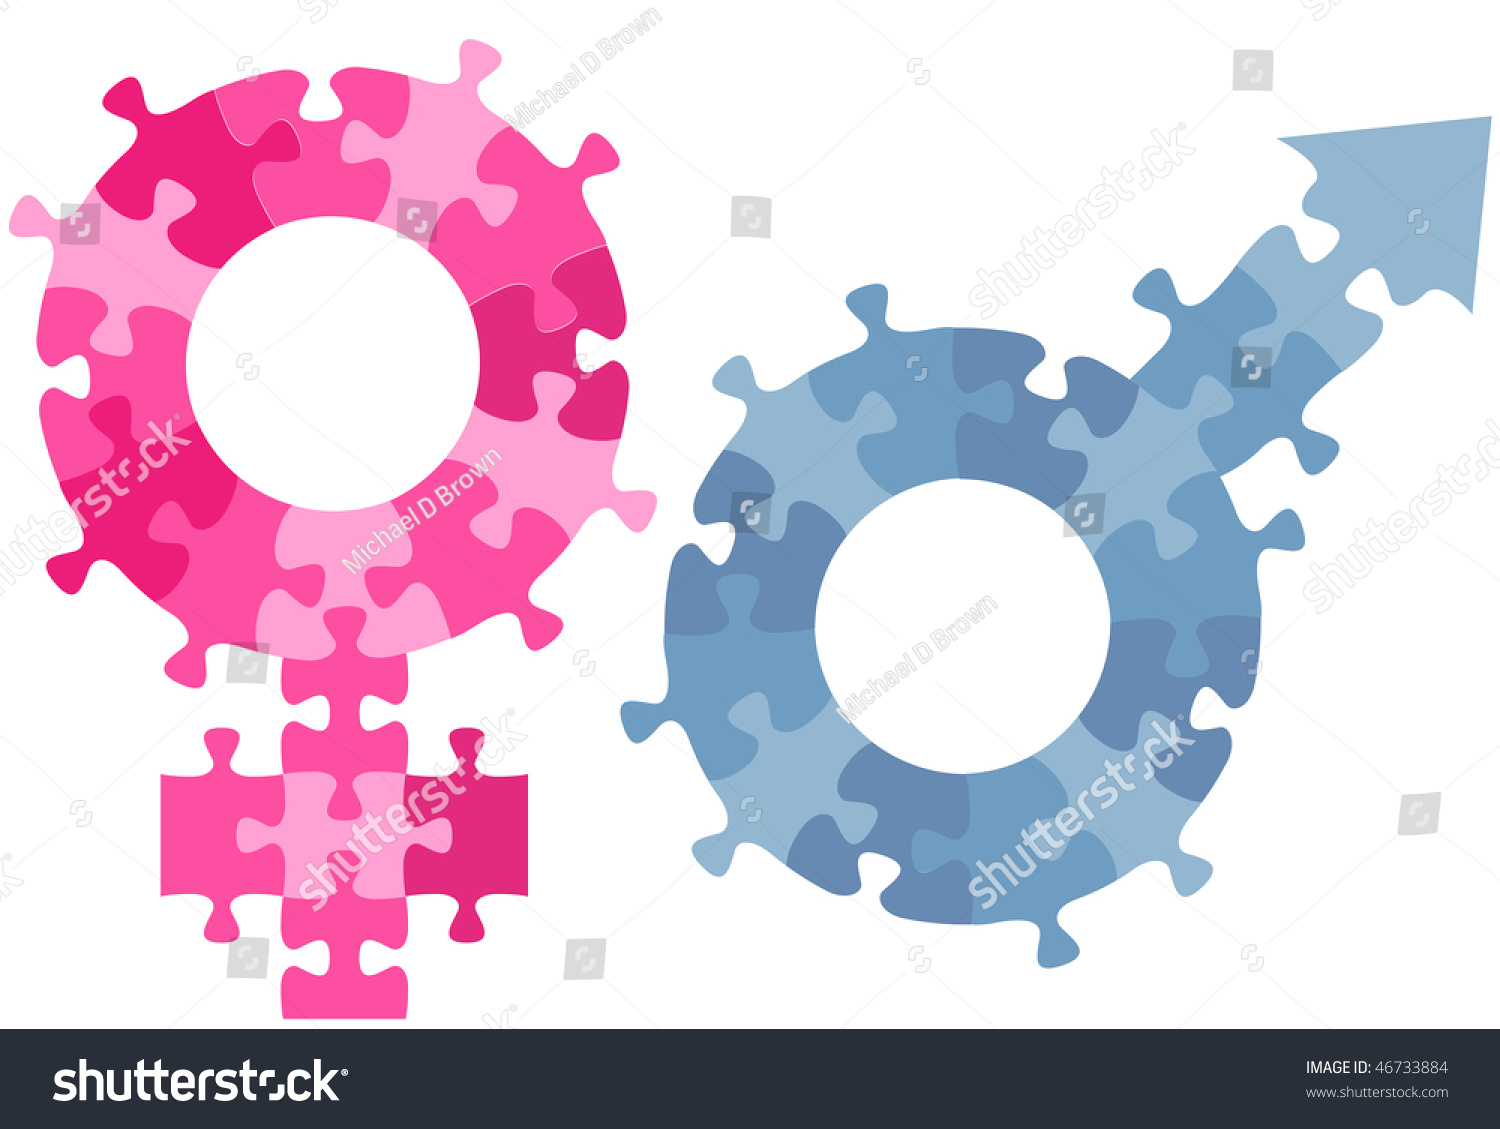 Couple Male Female Gender Sex Symbols Stock Vector Royalty Free 46733884 Shutterstock 